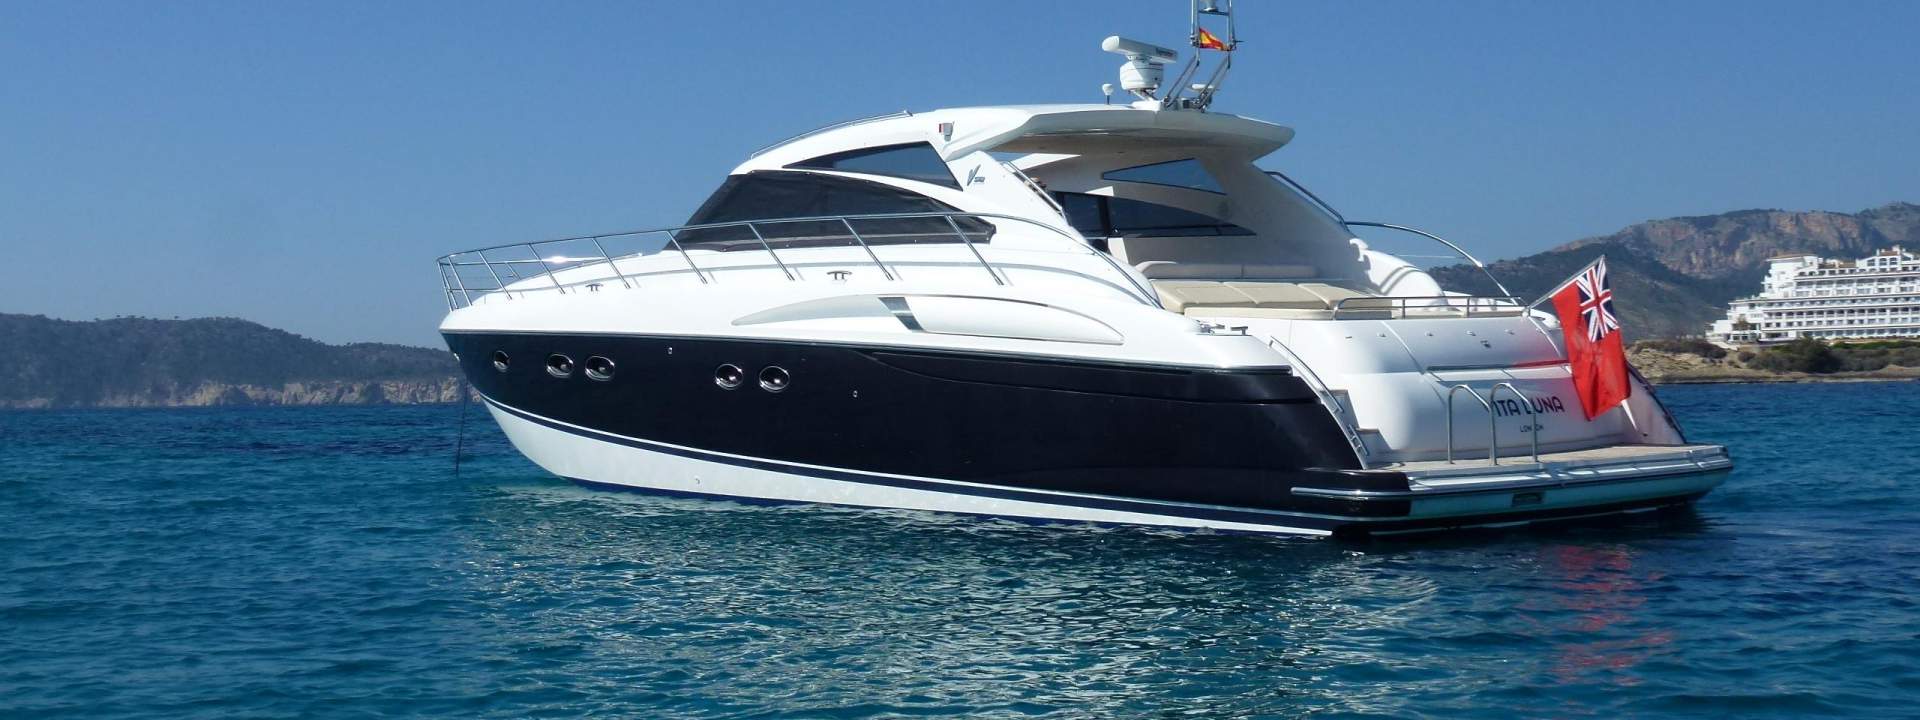 Luxury Yacht Princess V58